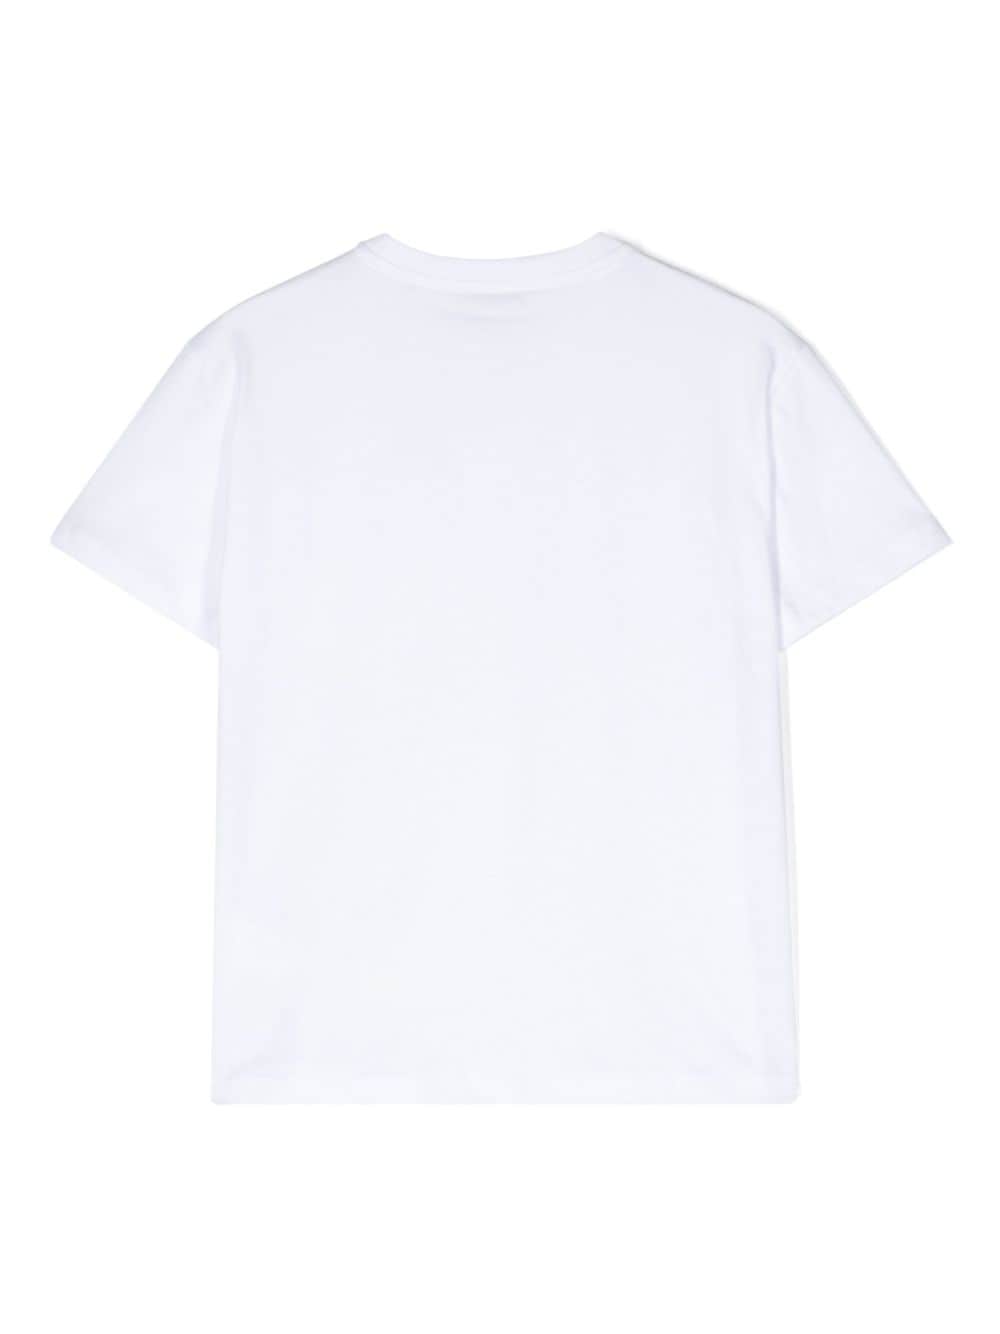 T-shirt garçon blanc